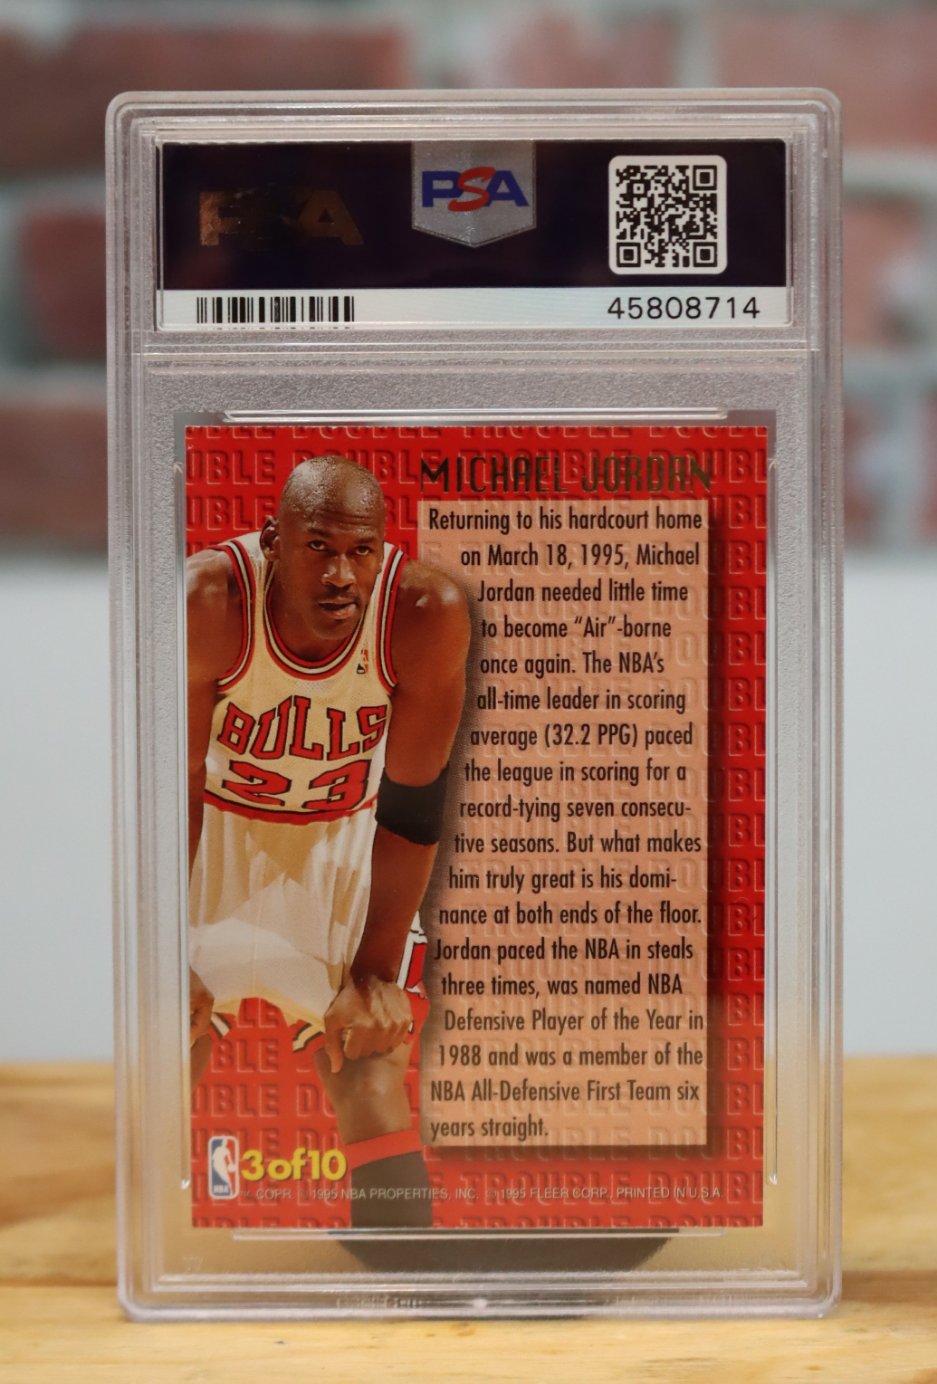 1995 Fleer Ultra Michael Jordan Double Trouble Insert Card PSA 8